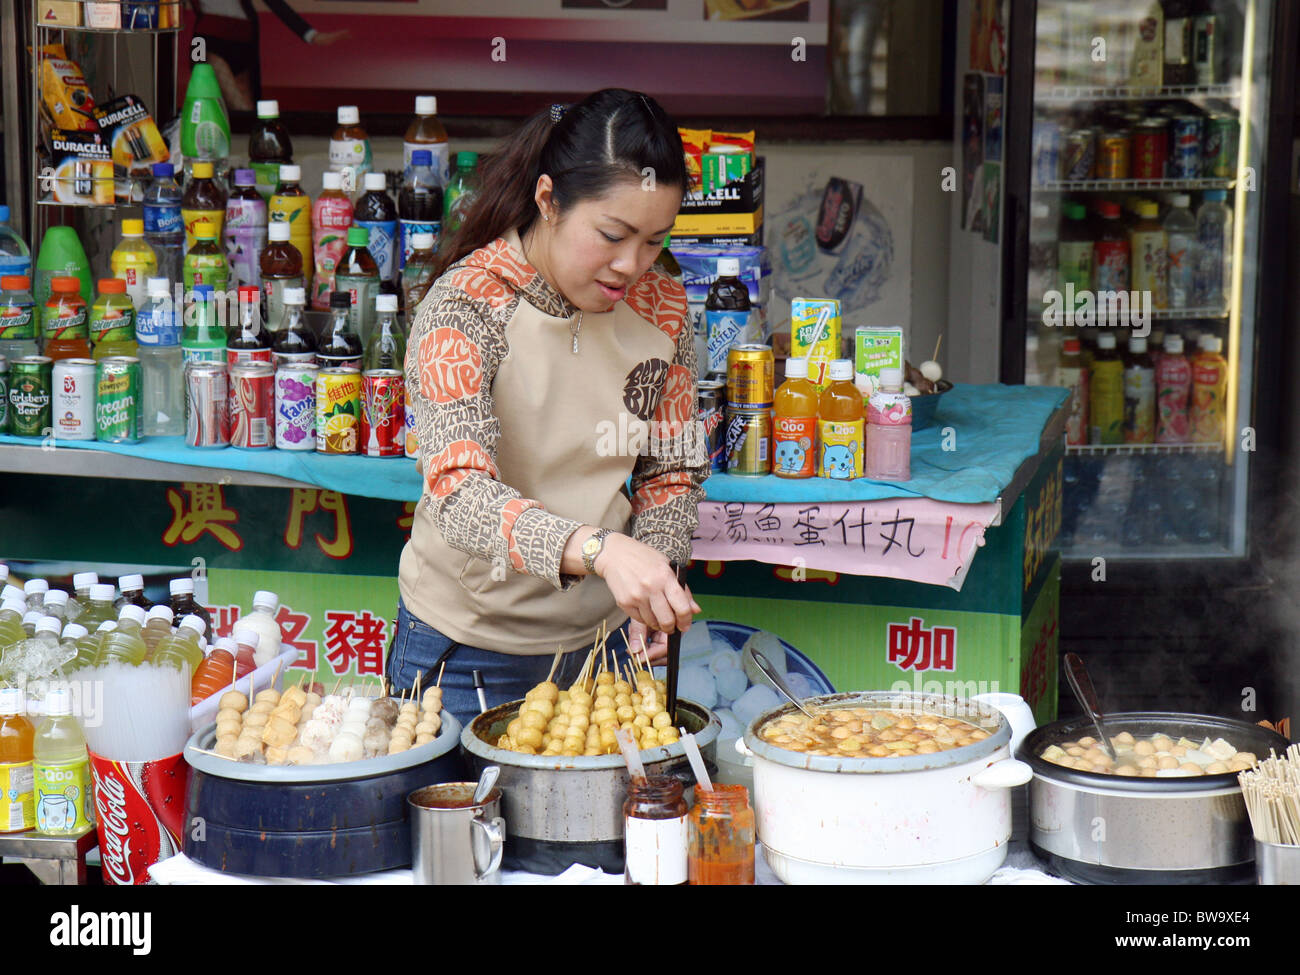 Snack-bar de la rue, Macao, Chine Banque D'Images